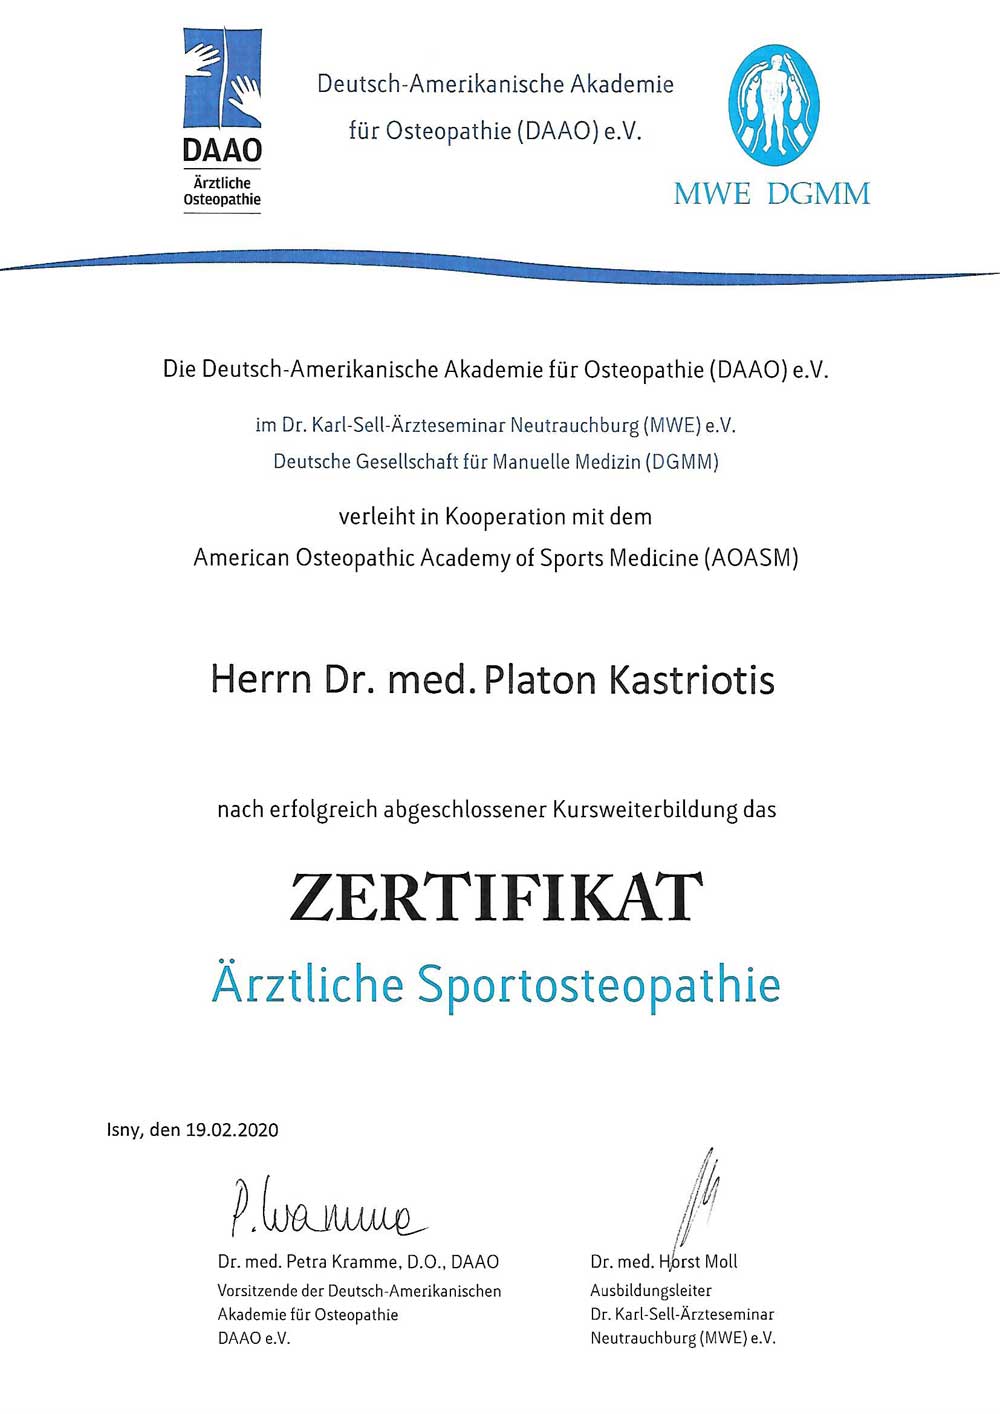 Verleihung des Zertifikats Sportosteopathie der DAAO